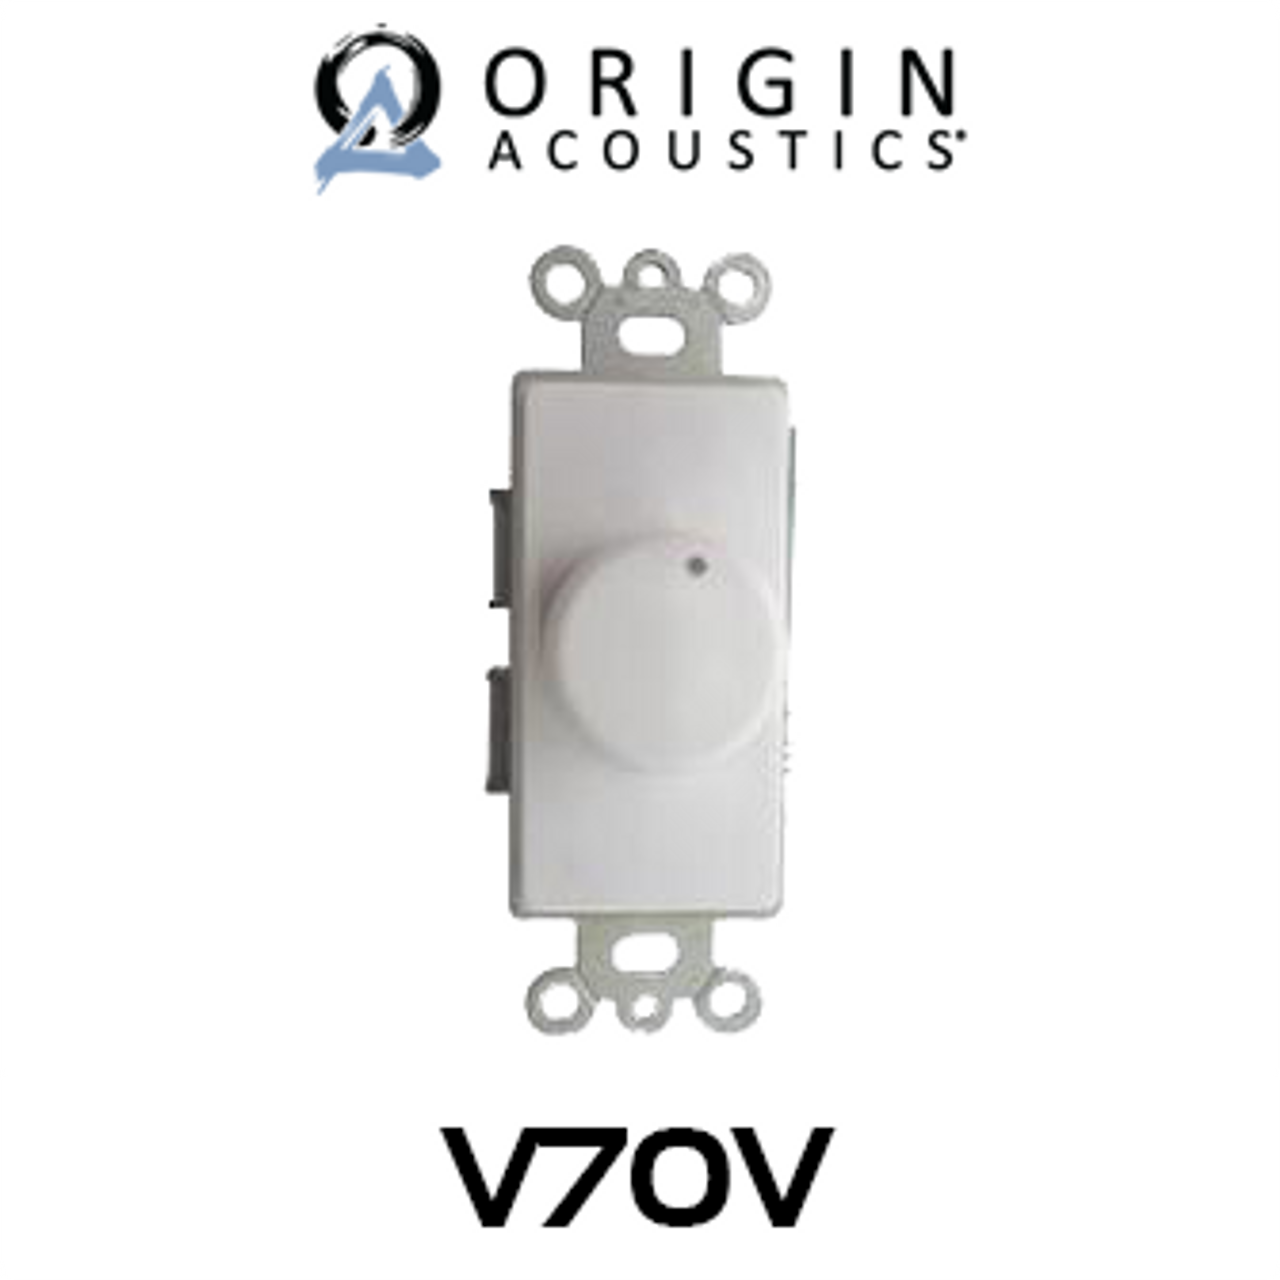 Origin Acoustics 70V Rotary Volume Control